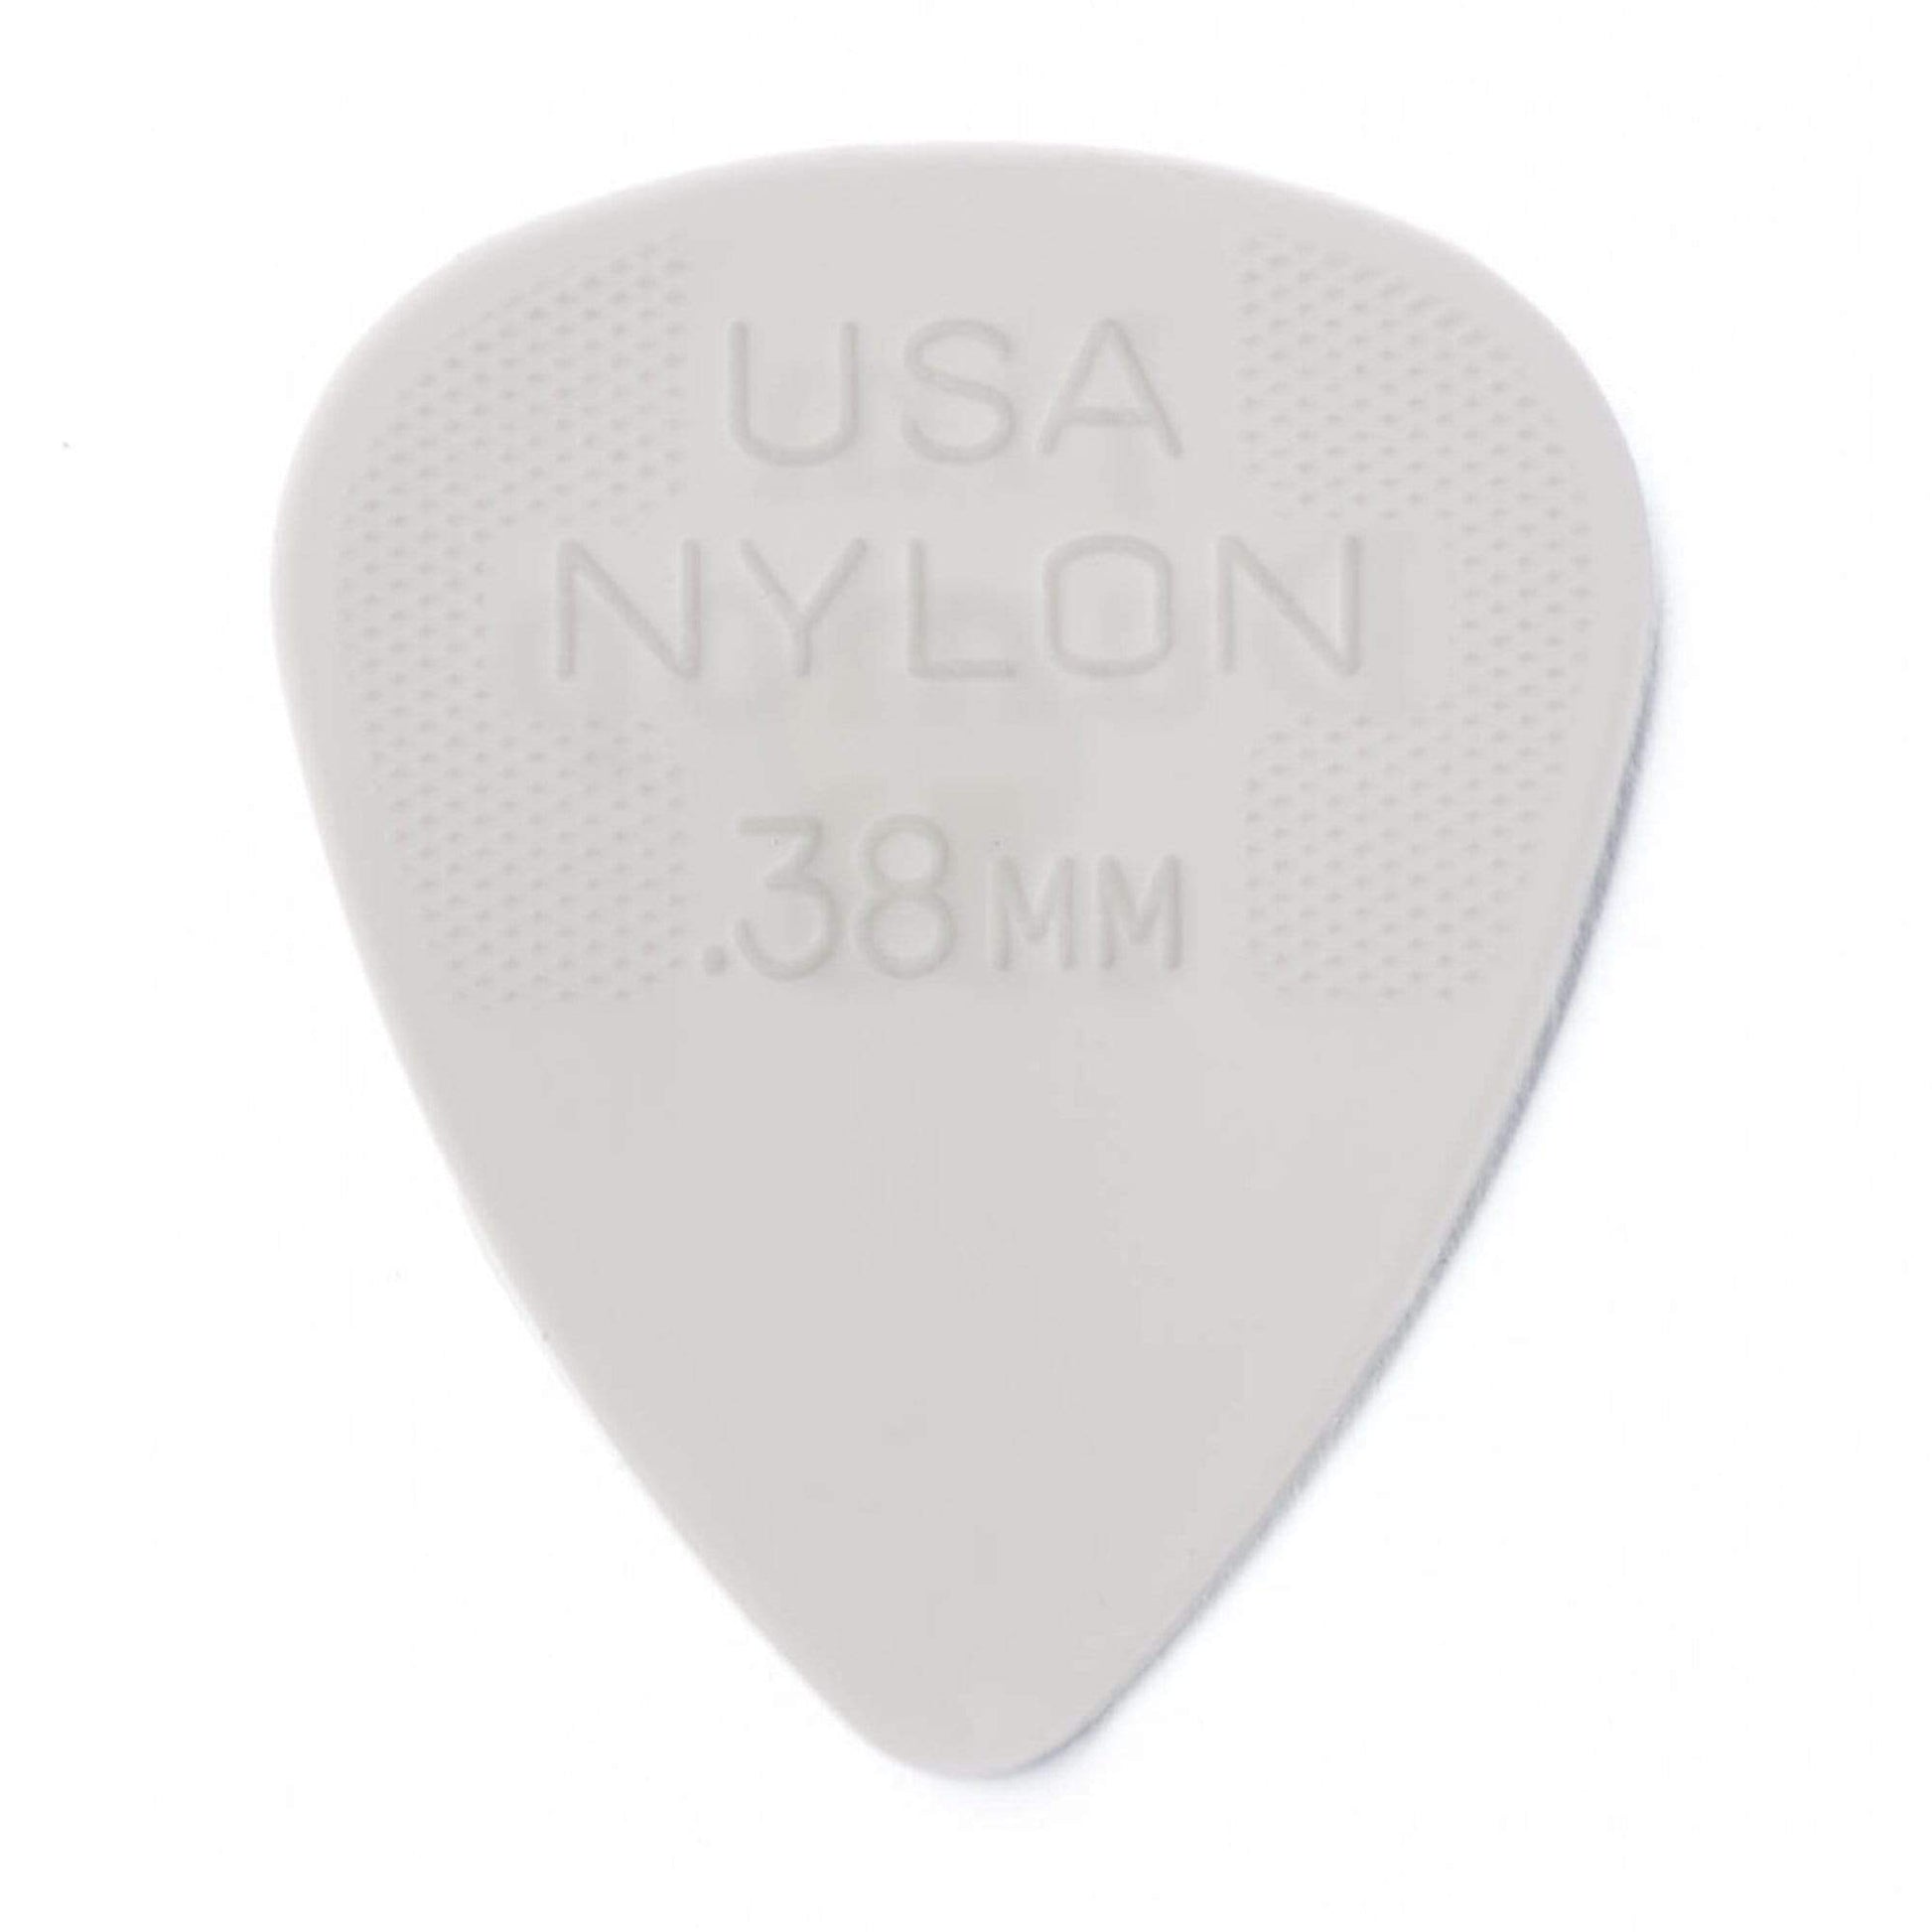 Dunlop Nylon Standard .38mm 3 Pack (36) Bundle Accessories / Picks